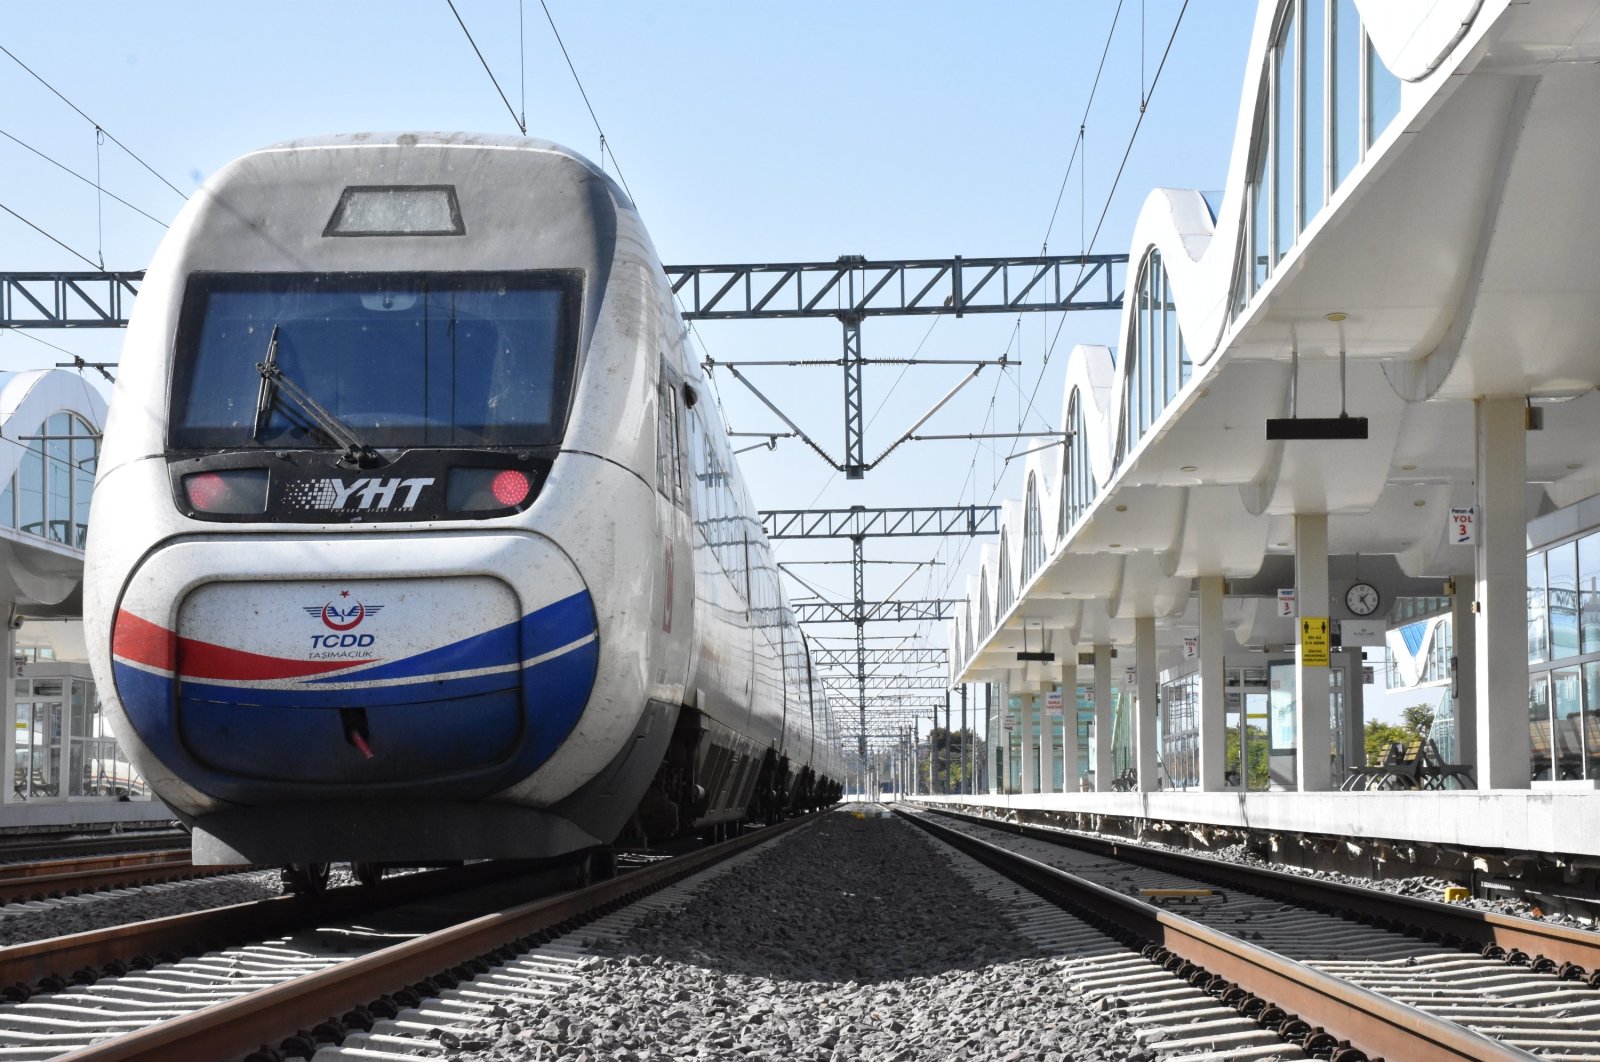 Ankara-Istanbul super-fast train to cut travel to 80 minutes | Daily Sabah - Daily Sabah